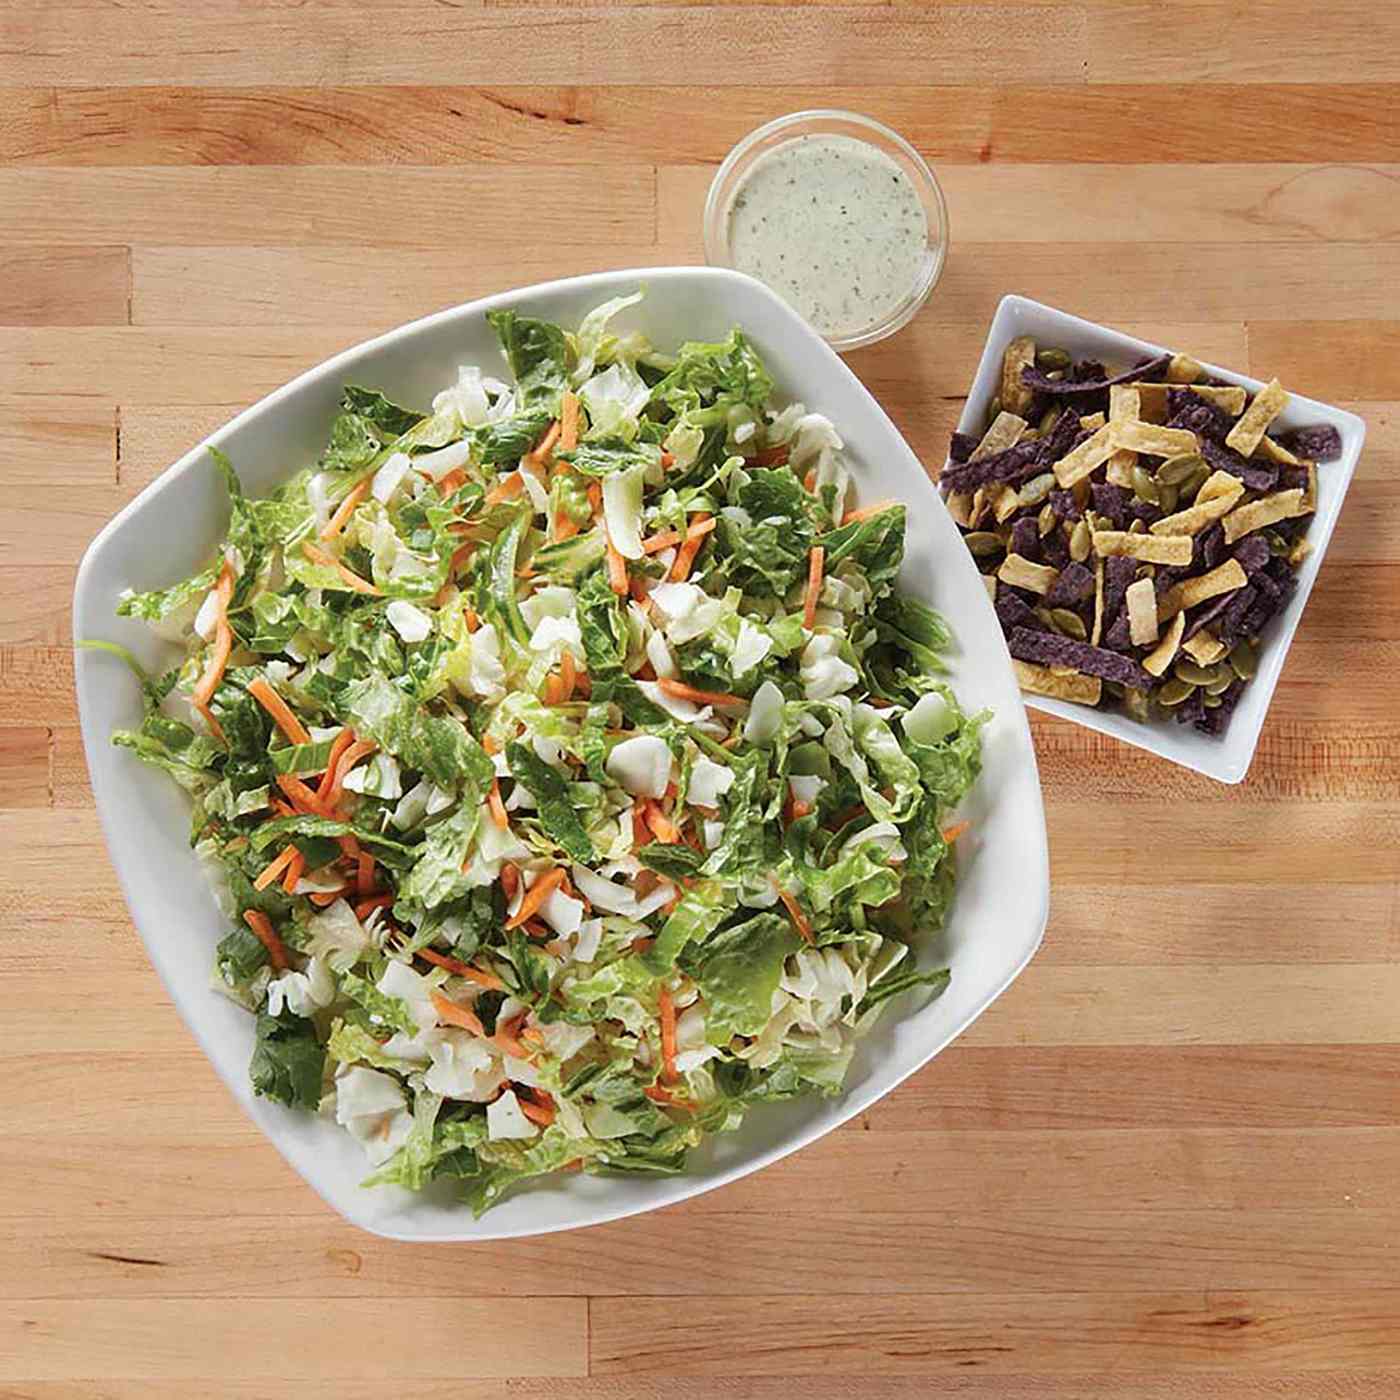 H-E-B Chopped Salad Kit - Southwest